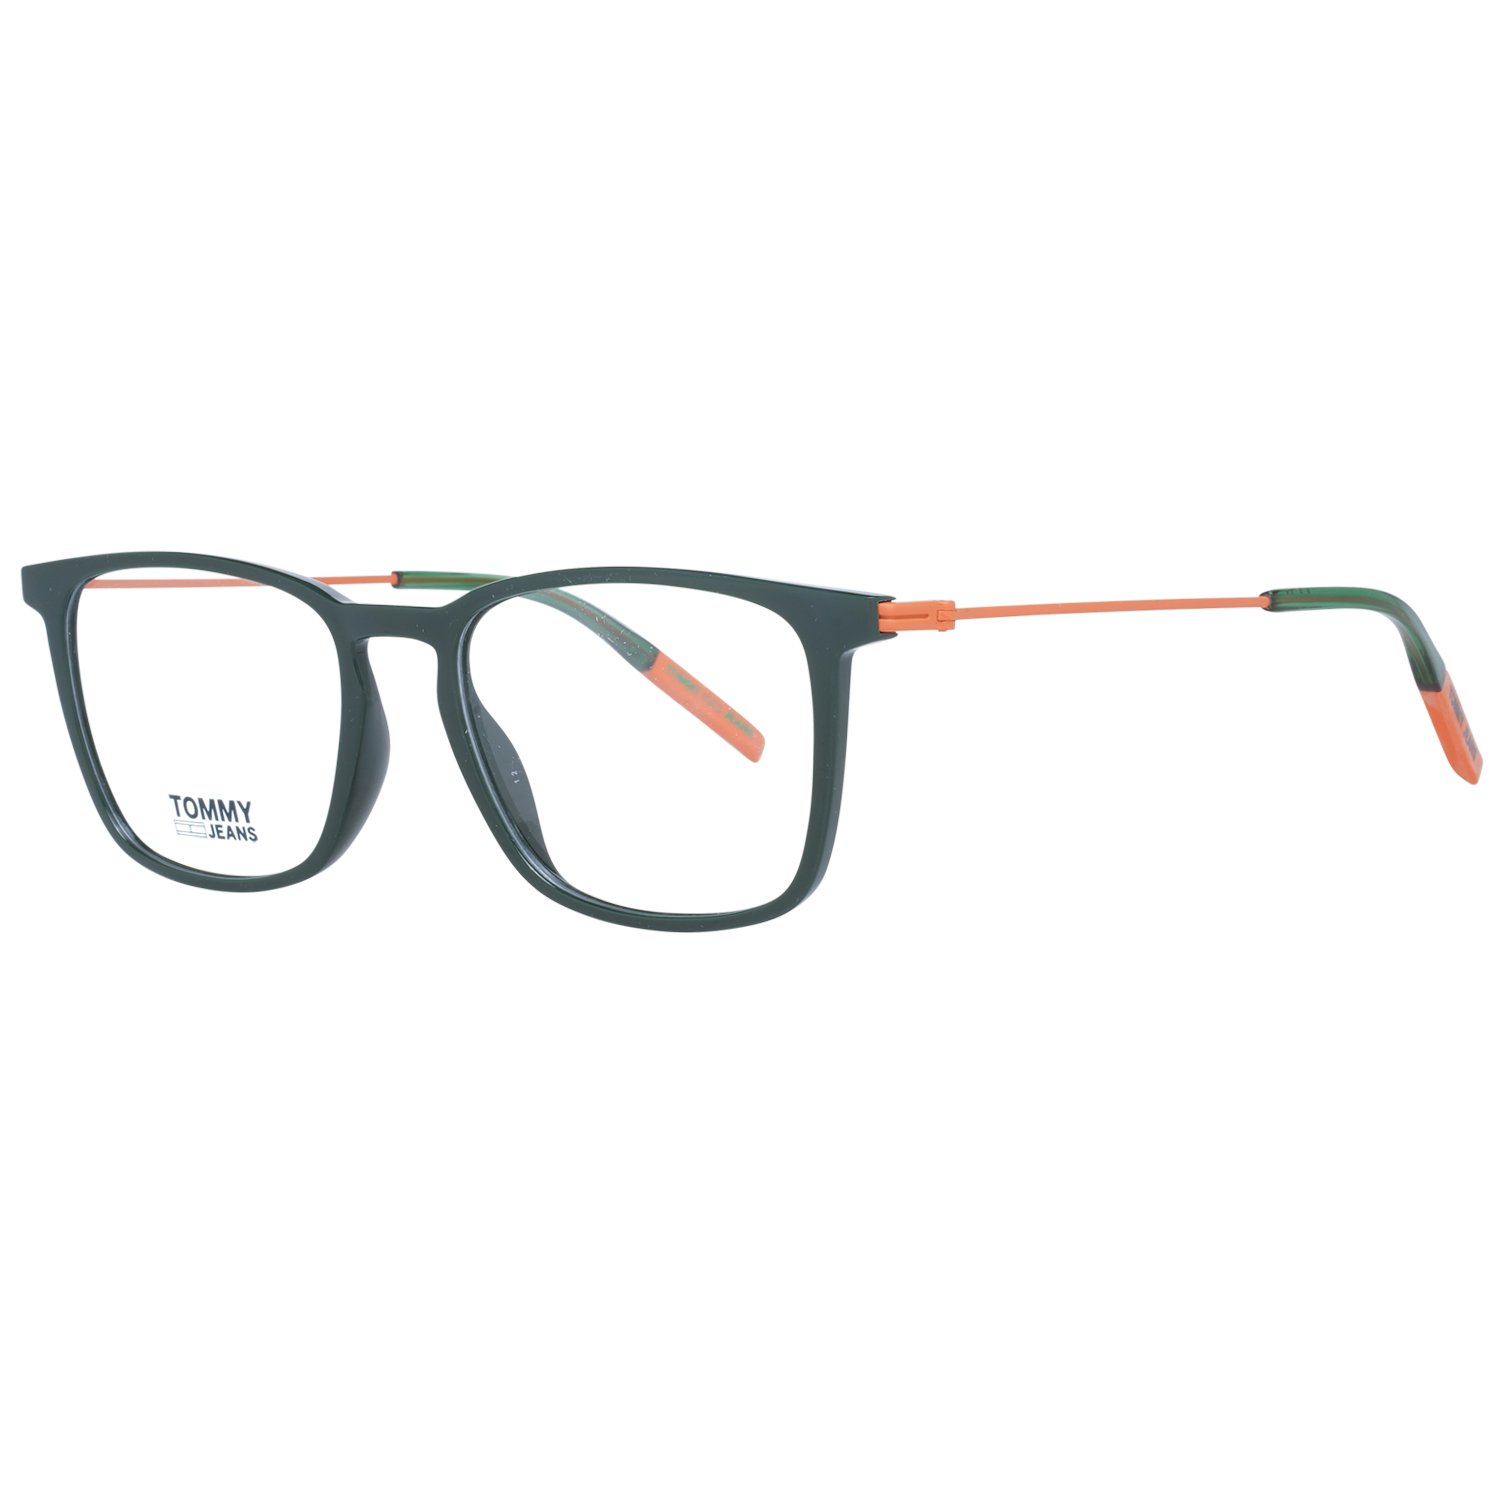 Tommy Hilfiger Eyeglasses Tommy Hilfiger Optical Frame TJ 0061 LGP 51 Eyeglasses Eyewear UK USA Australia 